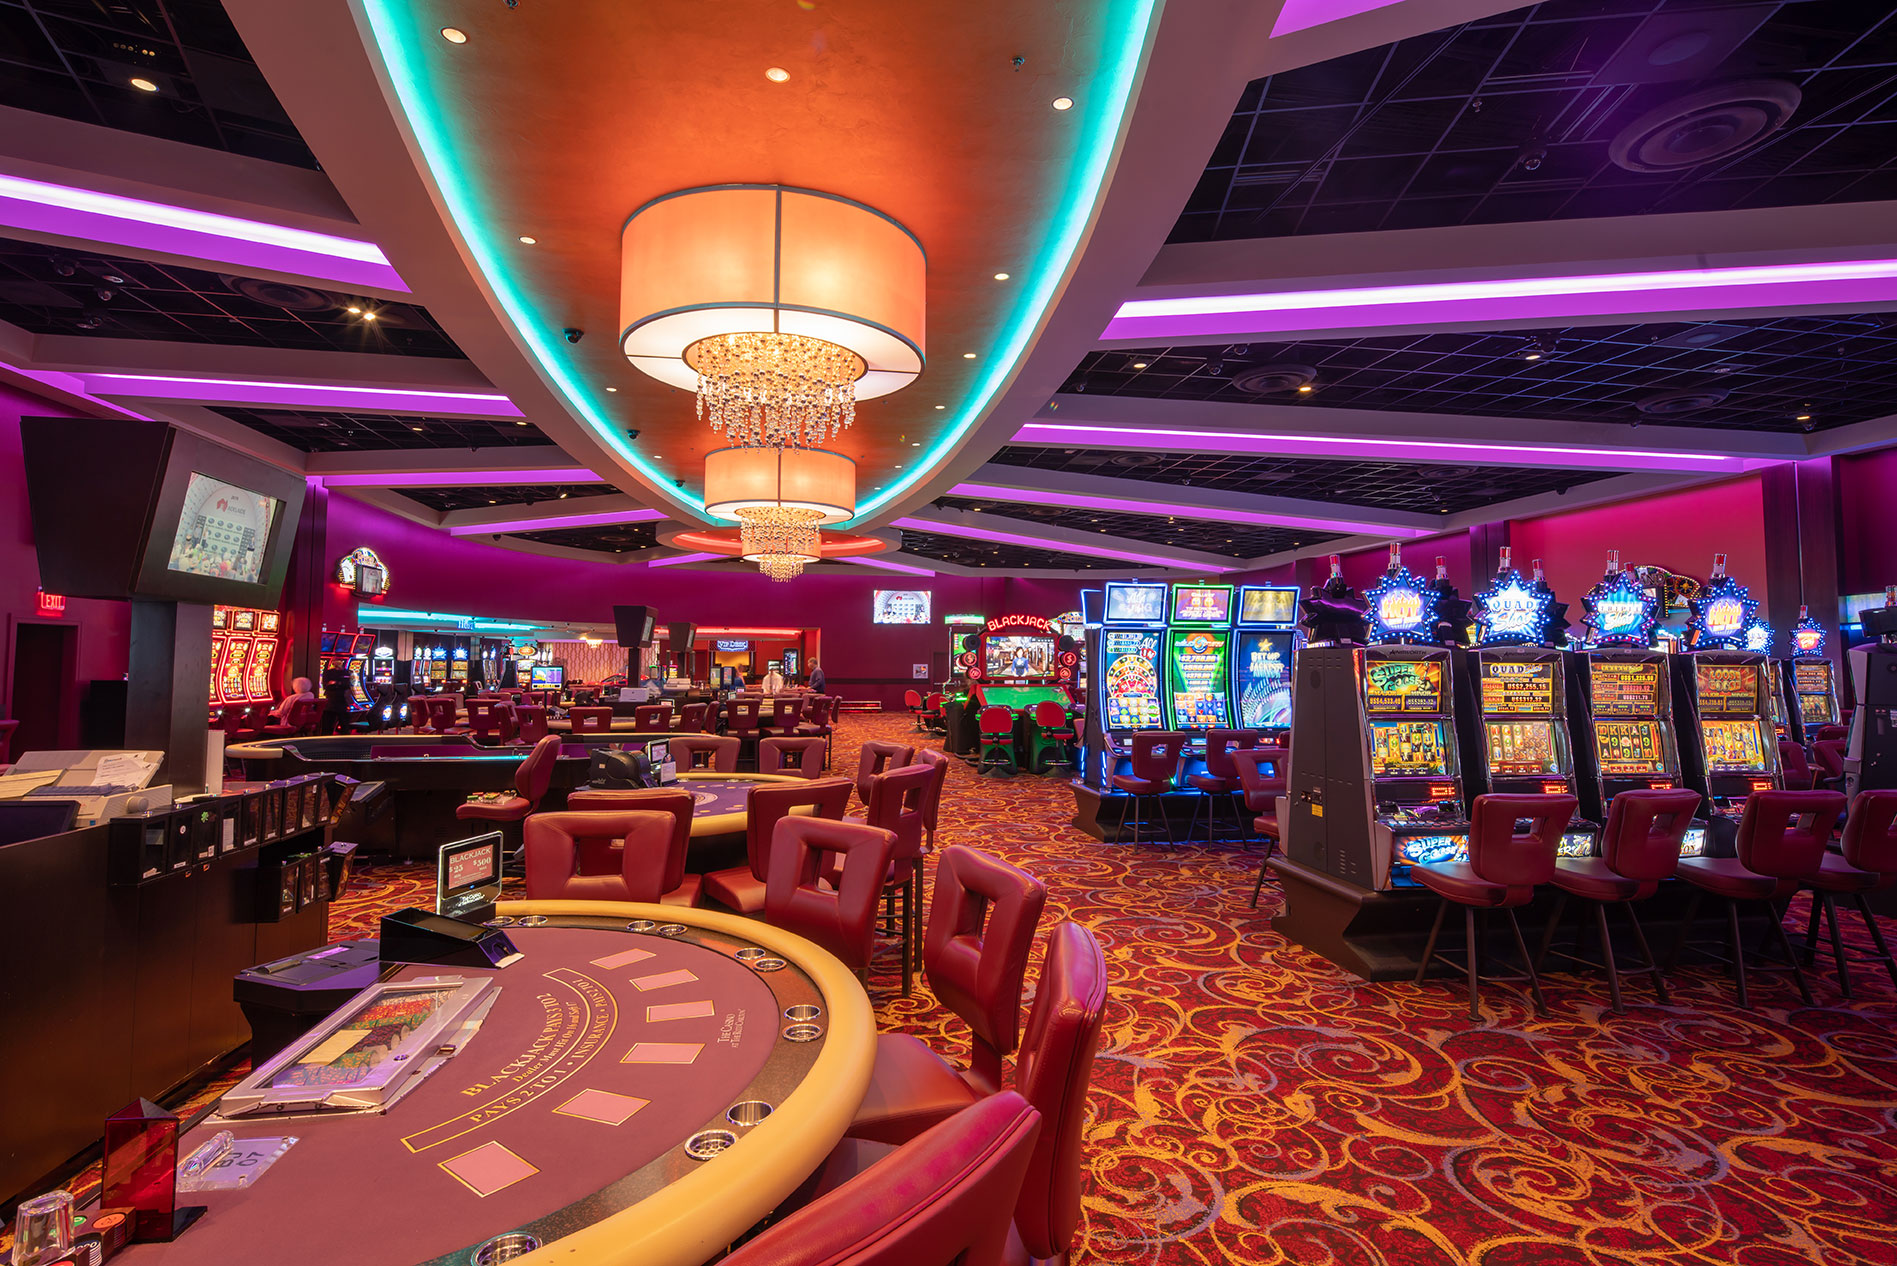 Ritz-Carlton in Aruba, Caribbean | Casinos - Rated 3.5